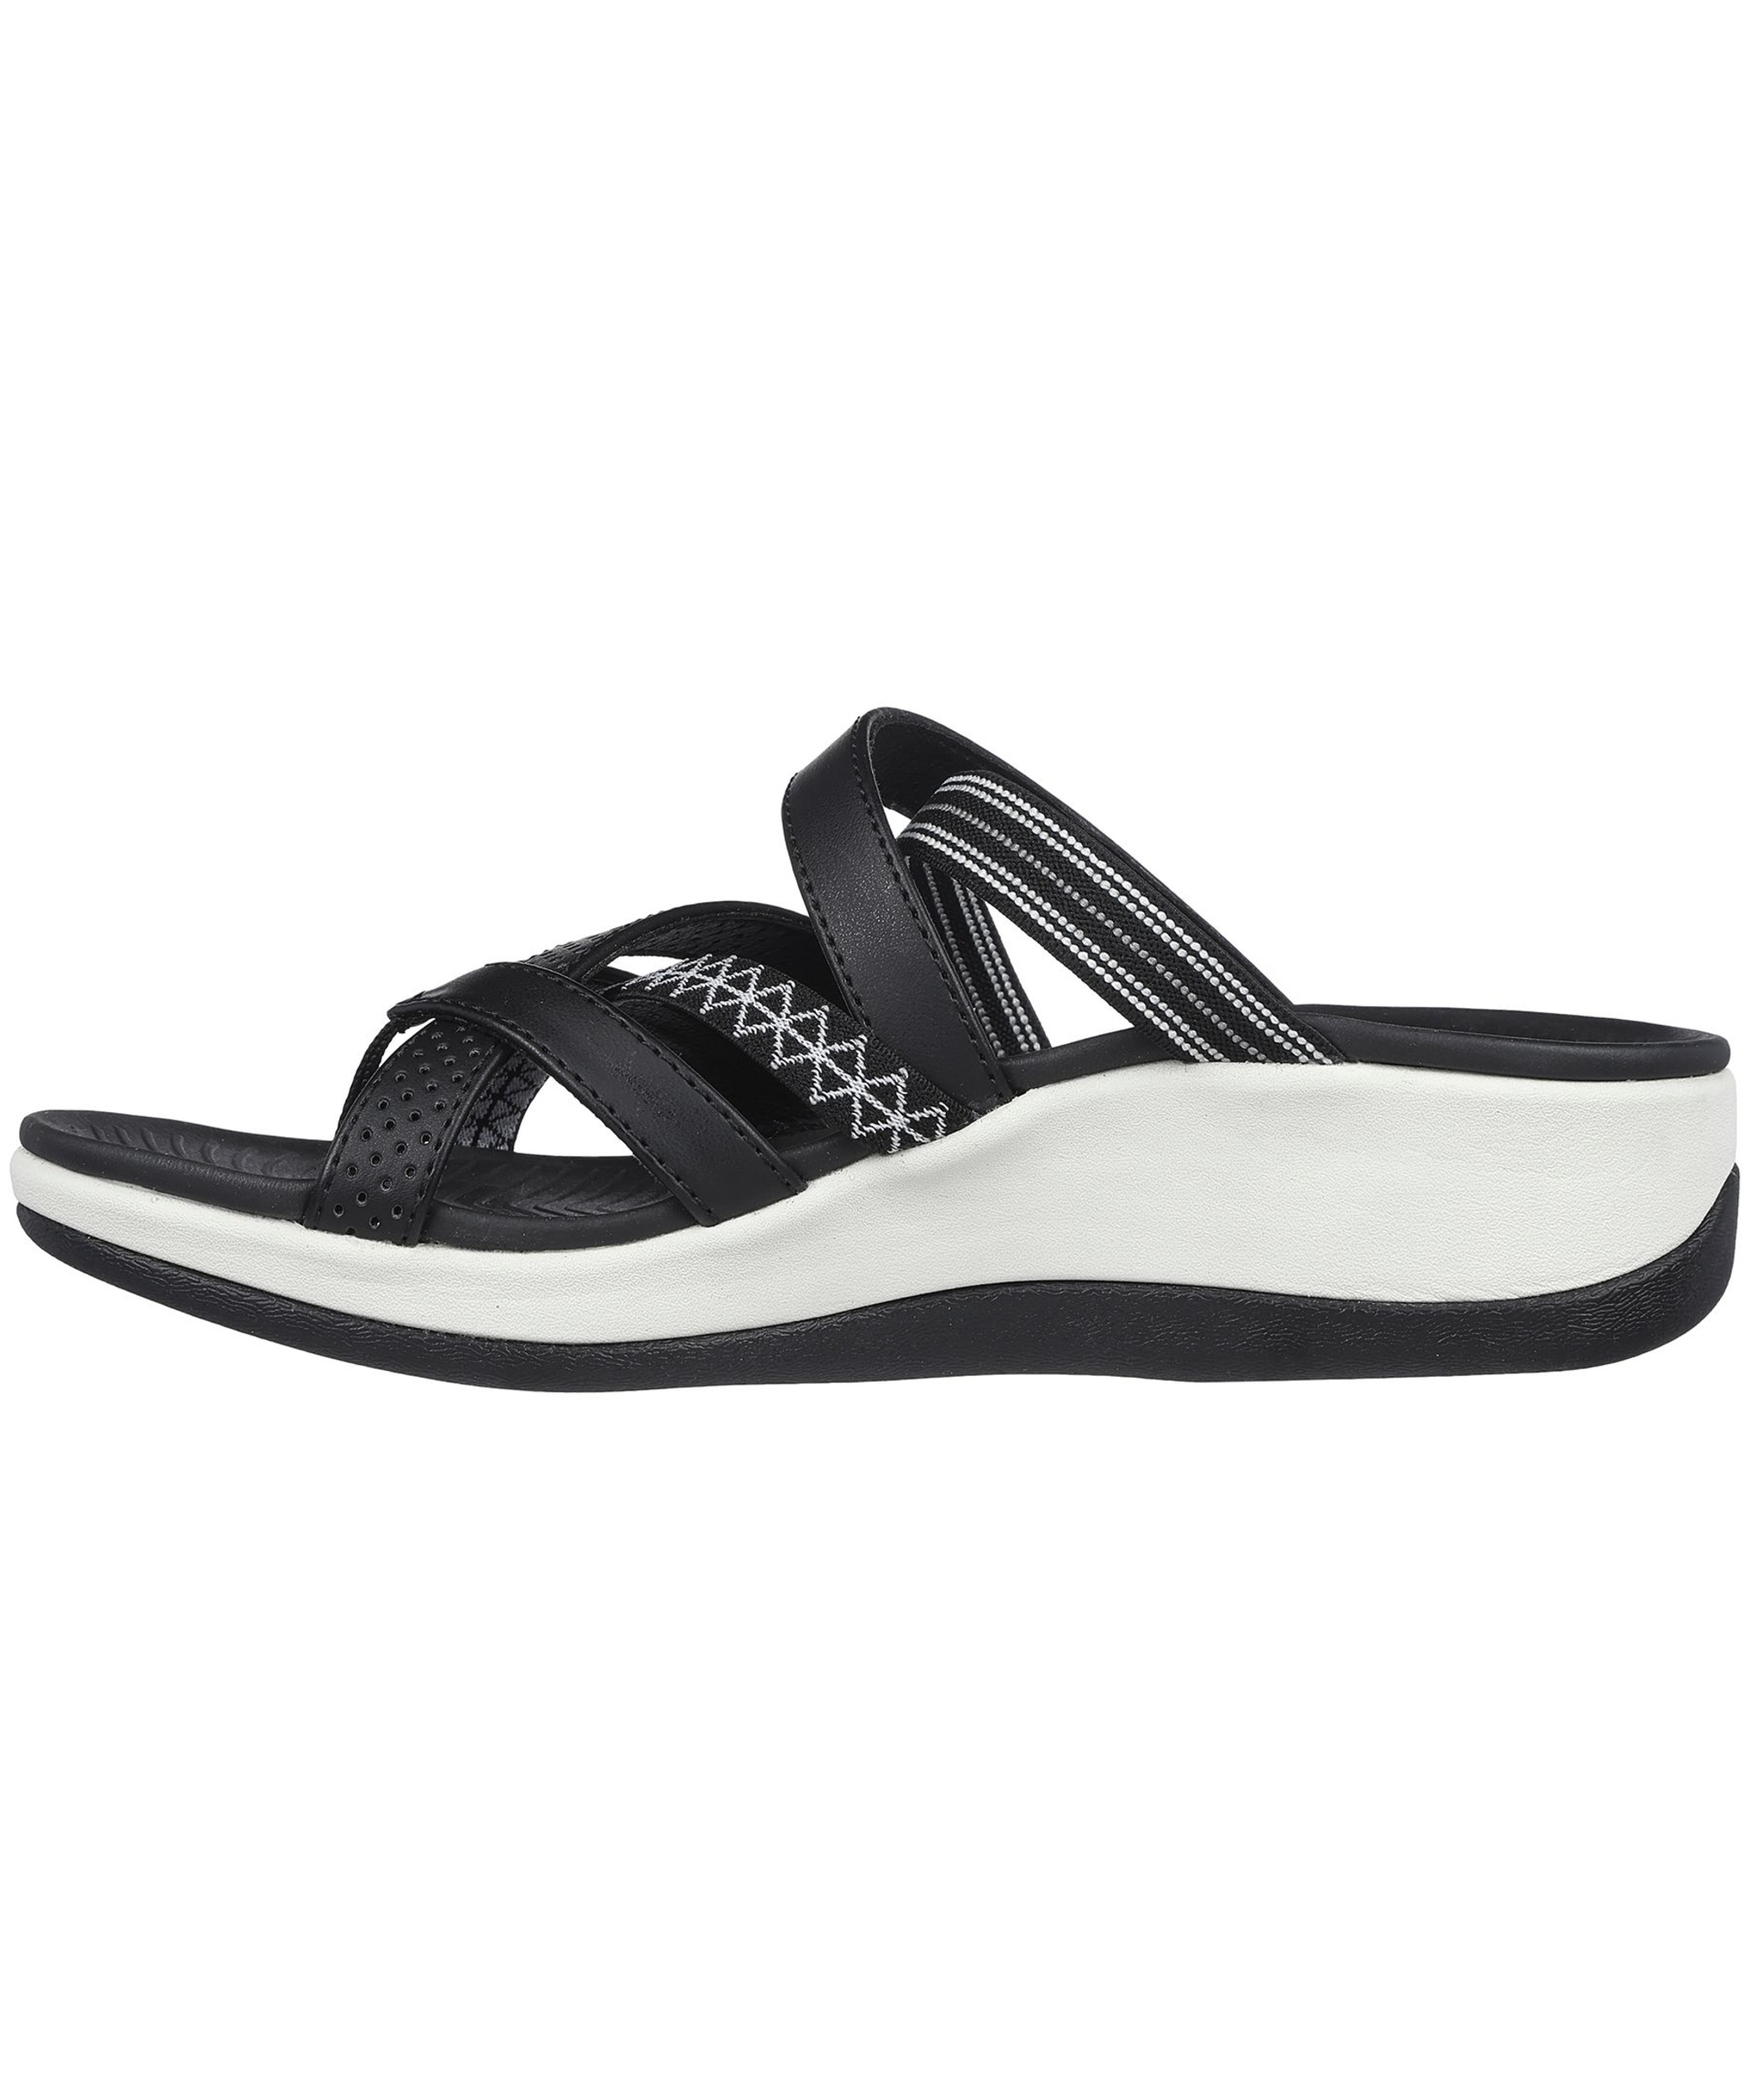 Skechers Women's Arch Fit Sunshine Sandals - Black White | Marks